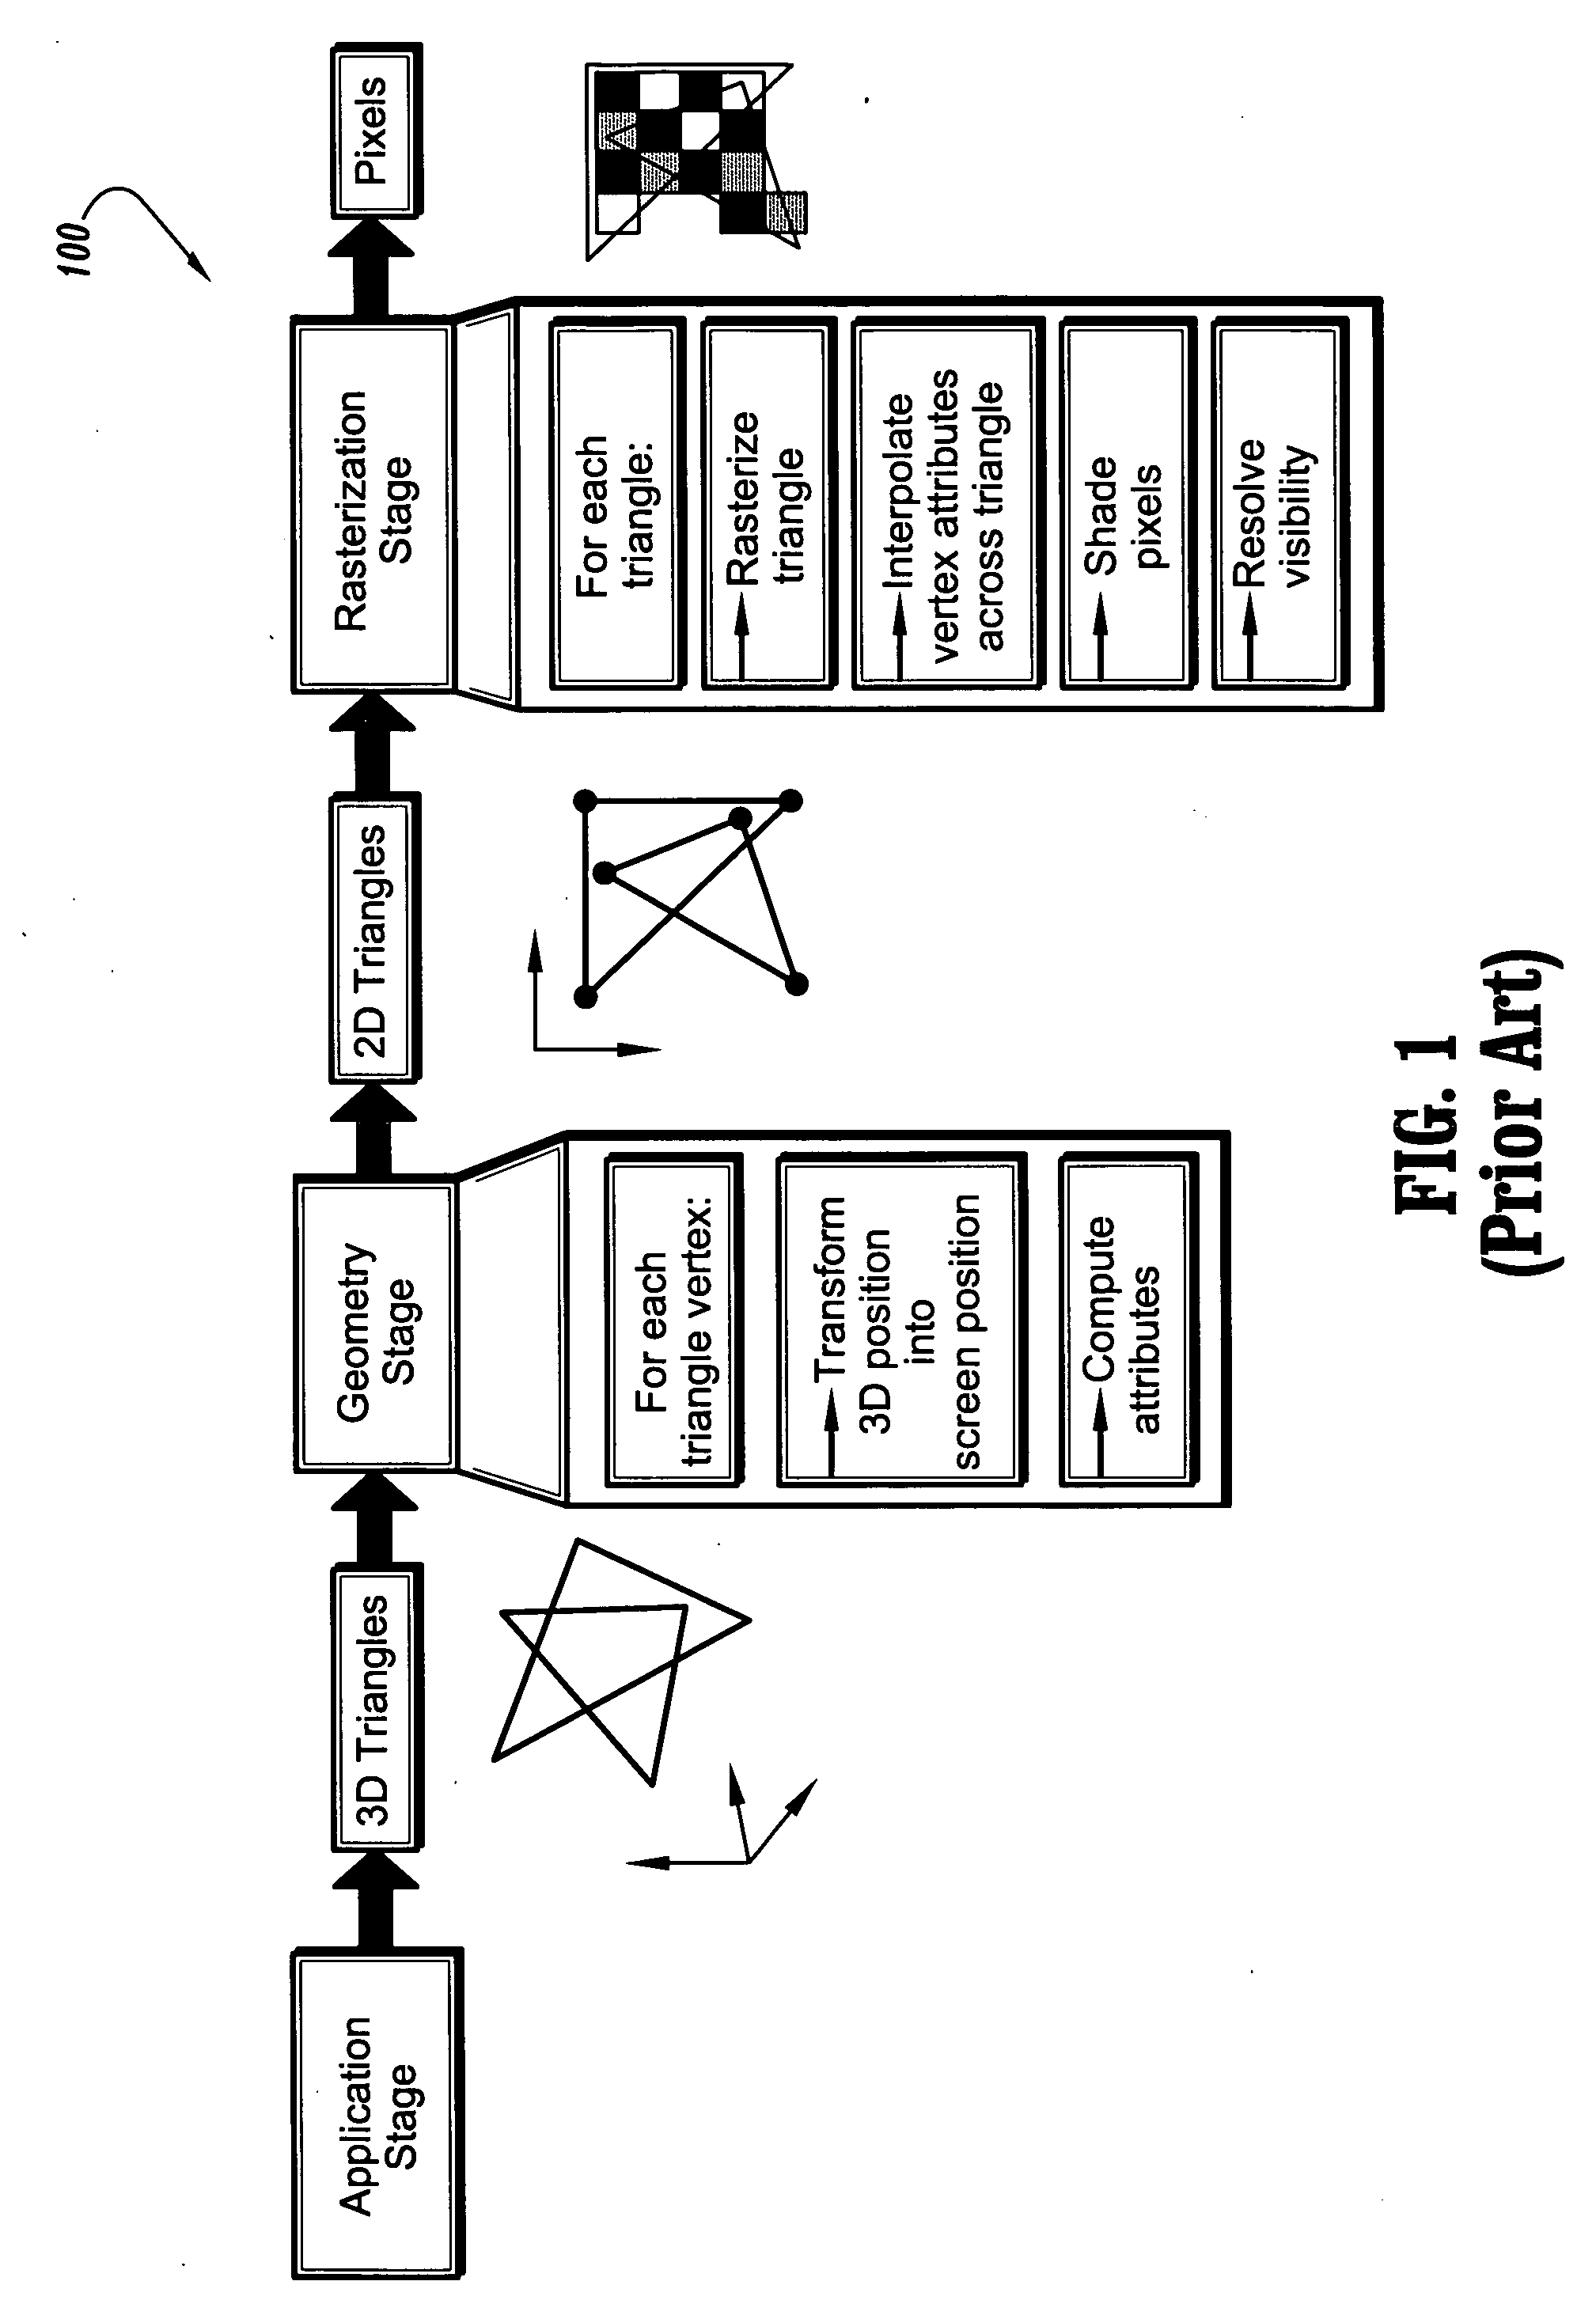 GPU-based image manipulation method for registration applications